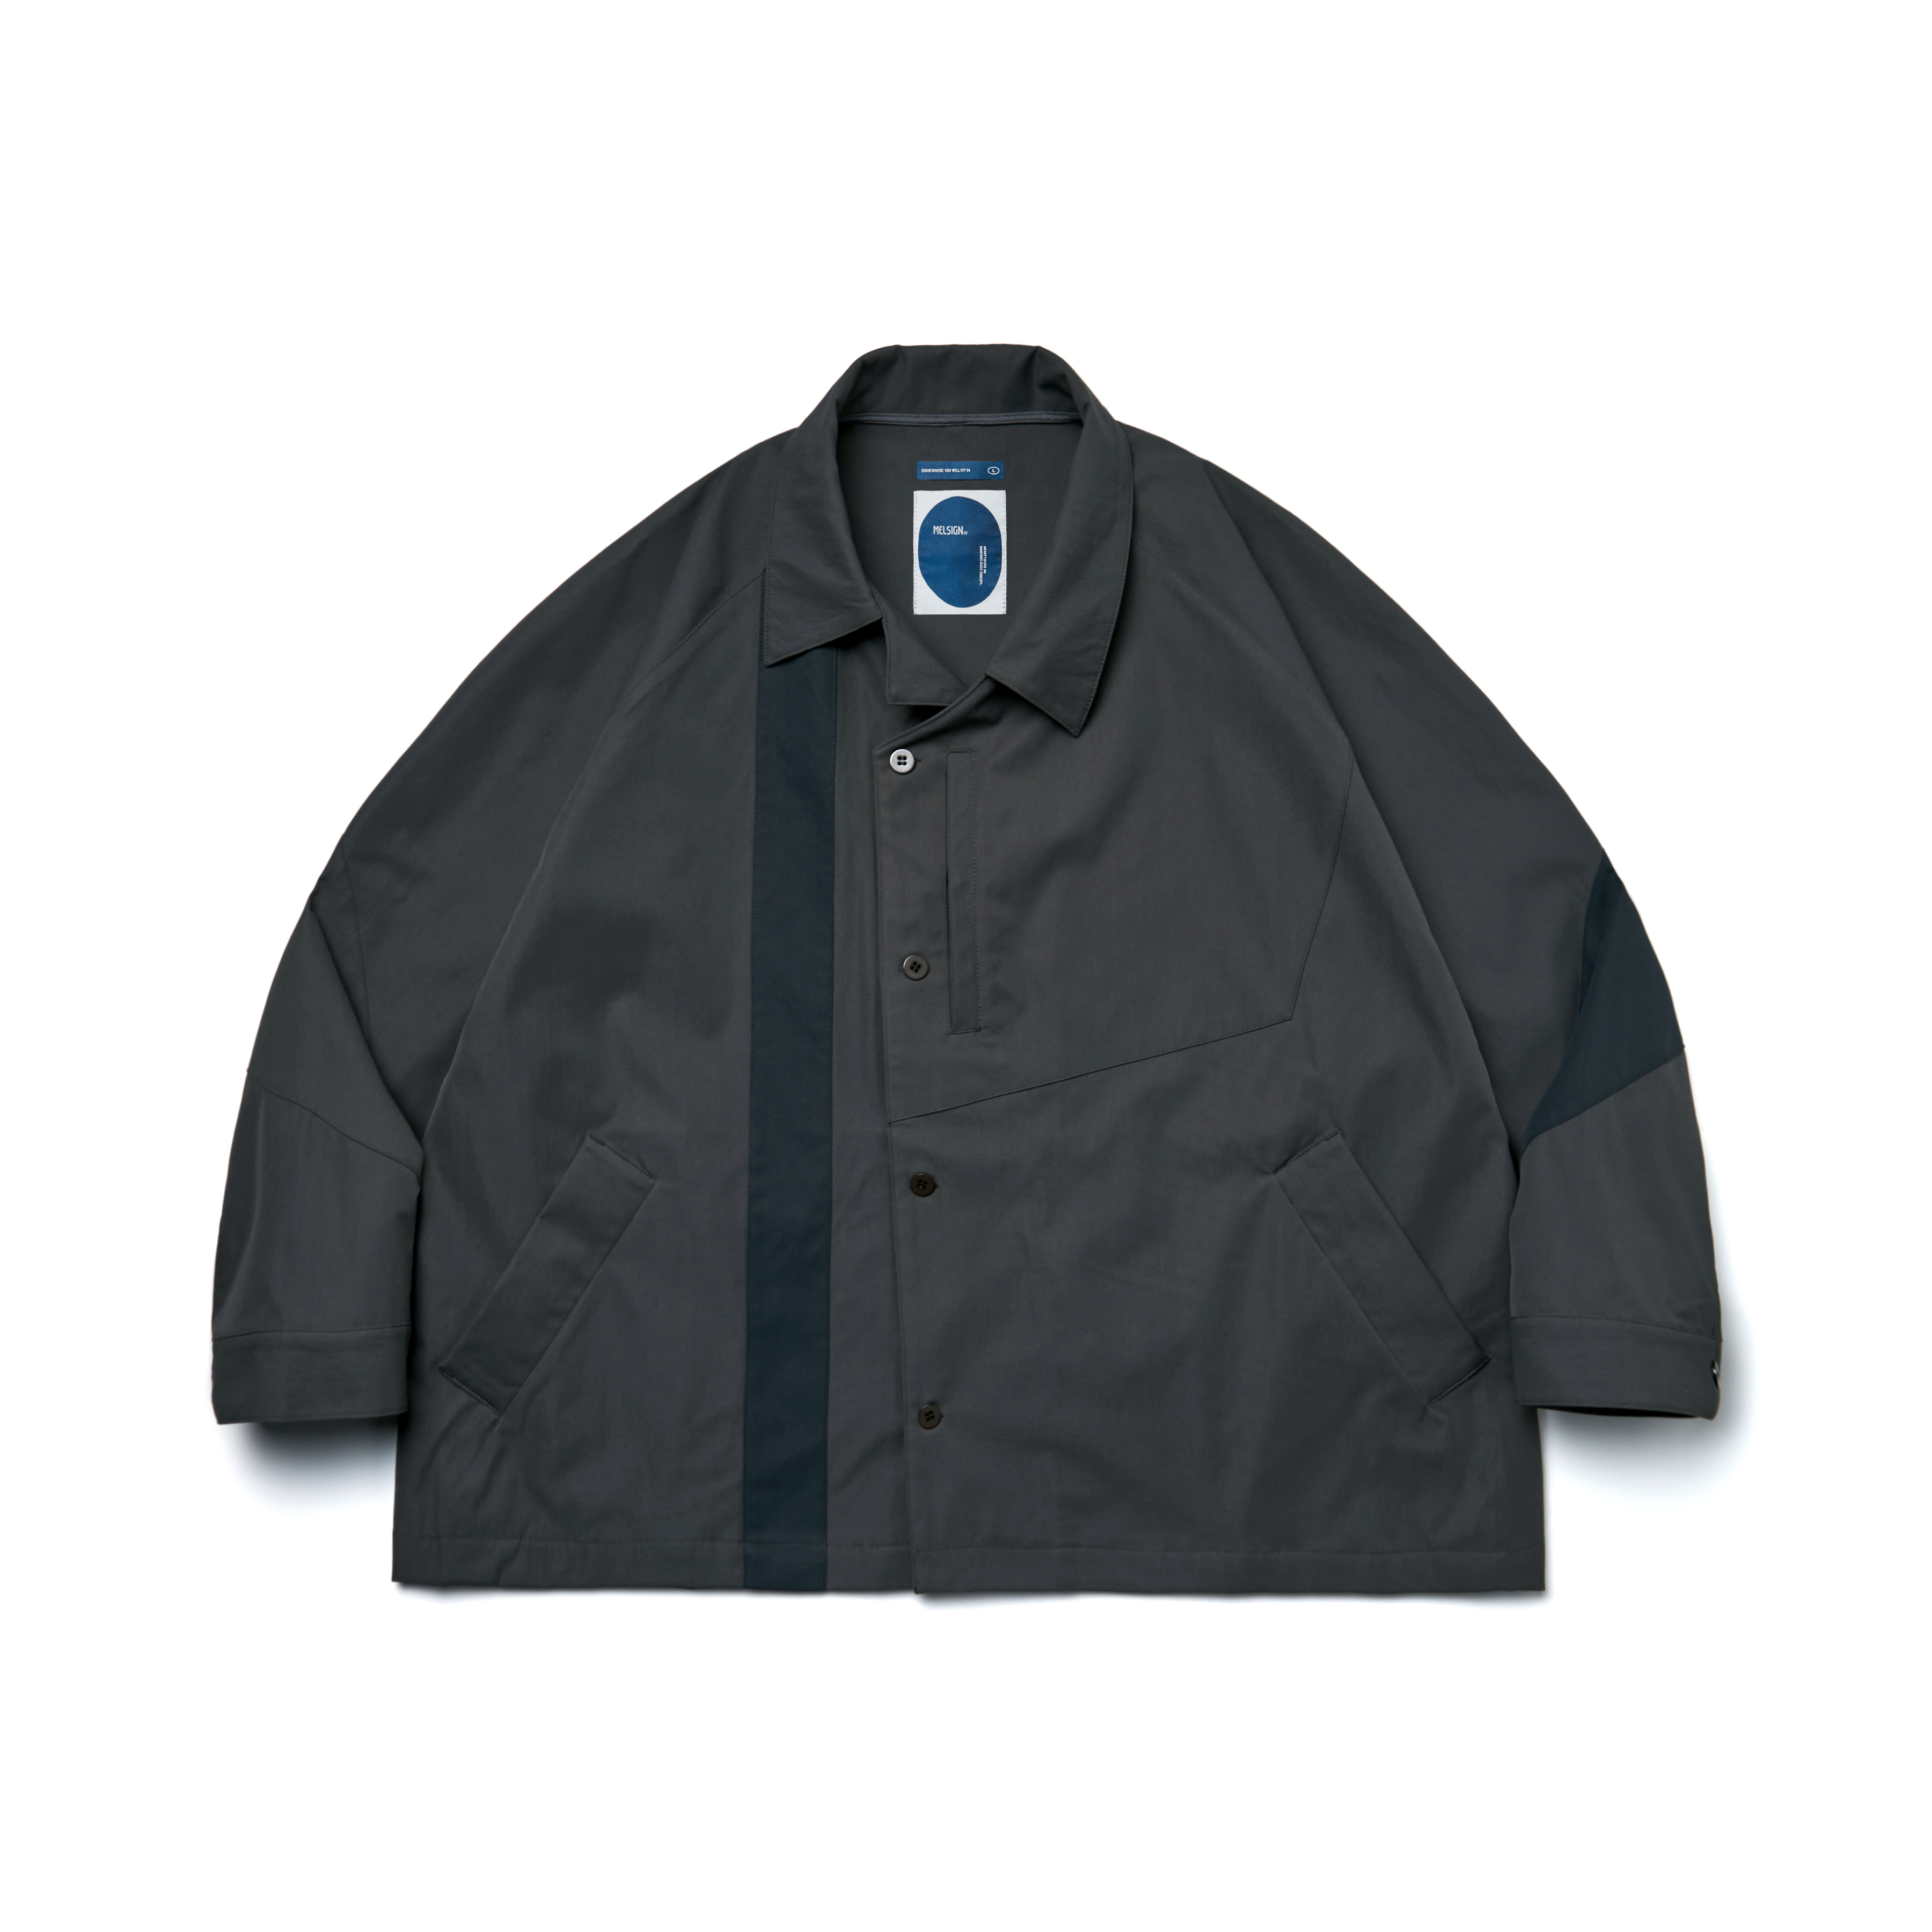 MELSIGN - Signature Over Shirt Jacket - Gray